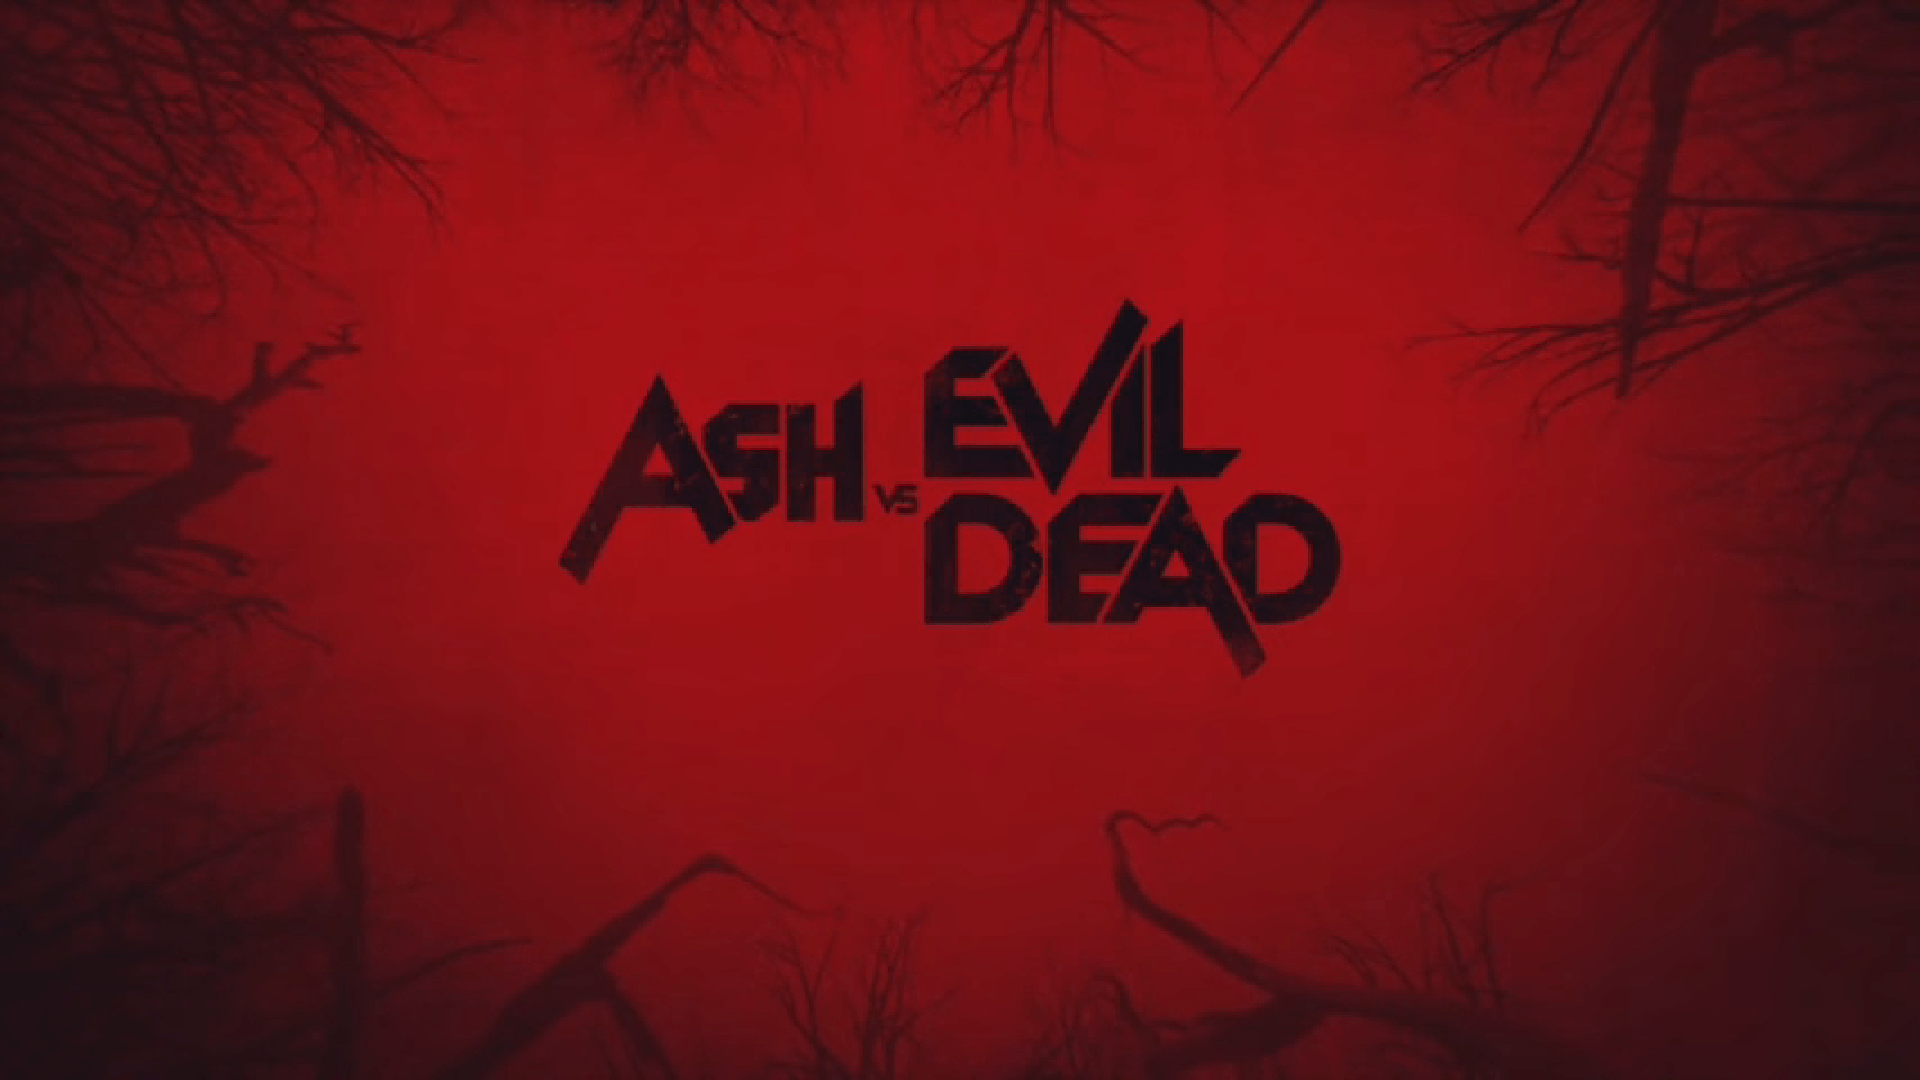 First 4 Minuites of Ash VS Evil Dead Ghic News